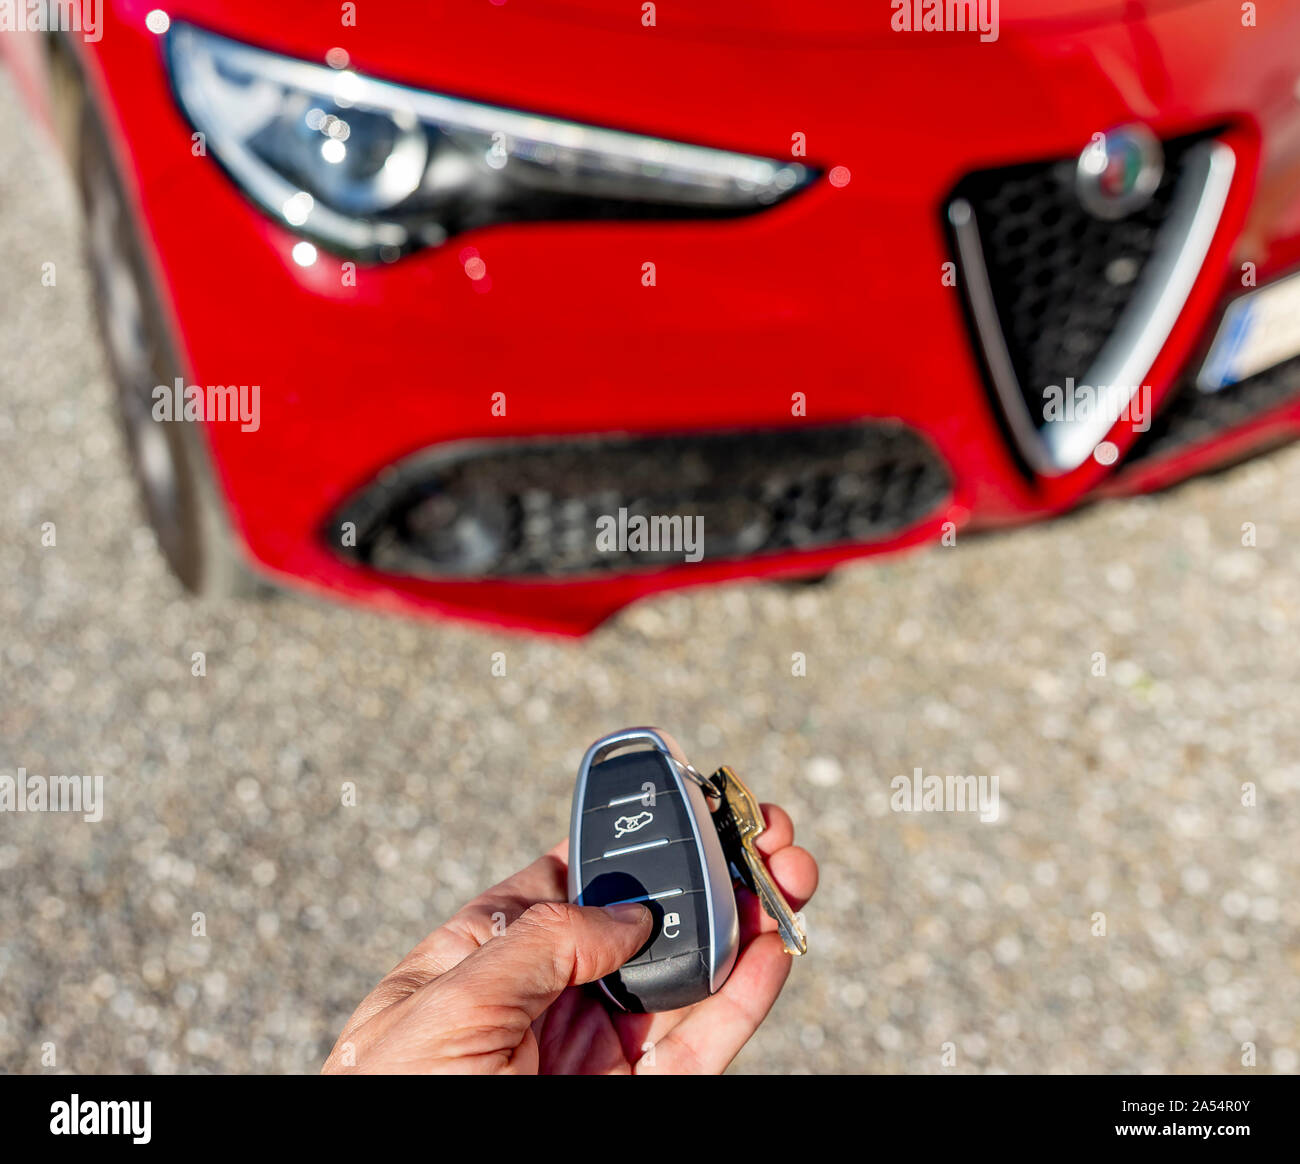 A hand operates the remote control of a beautiful red Italian sports car Alfa Romeo Stelvio Stock Photo